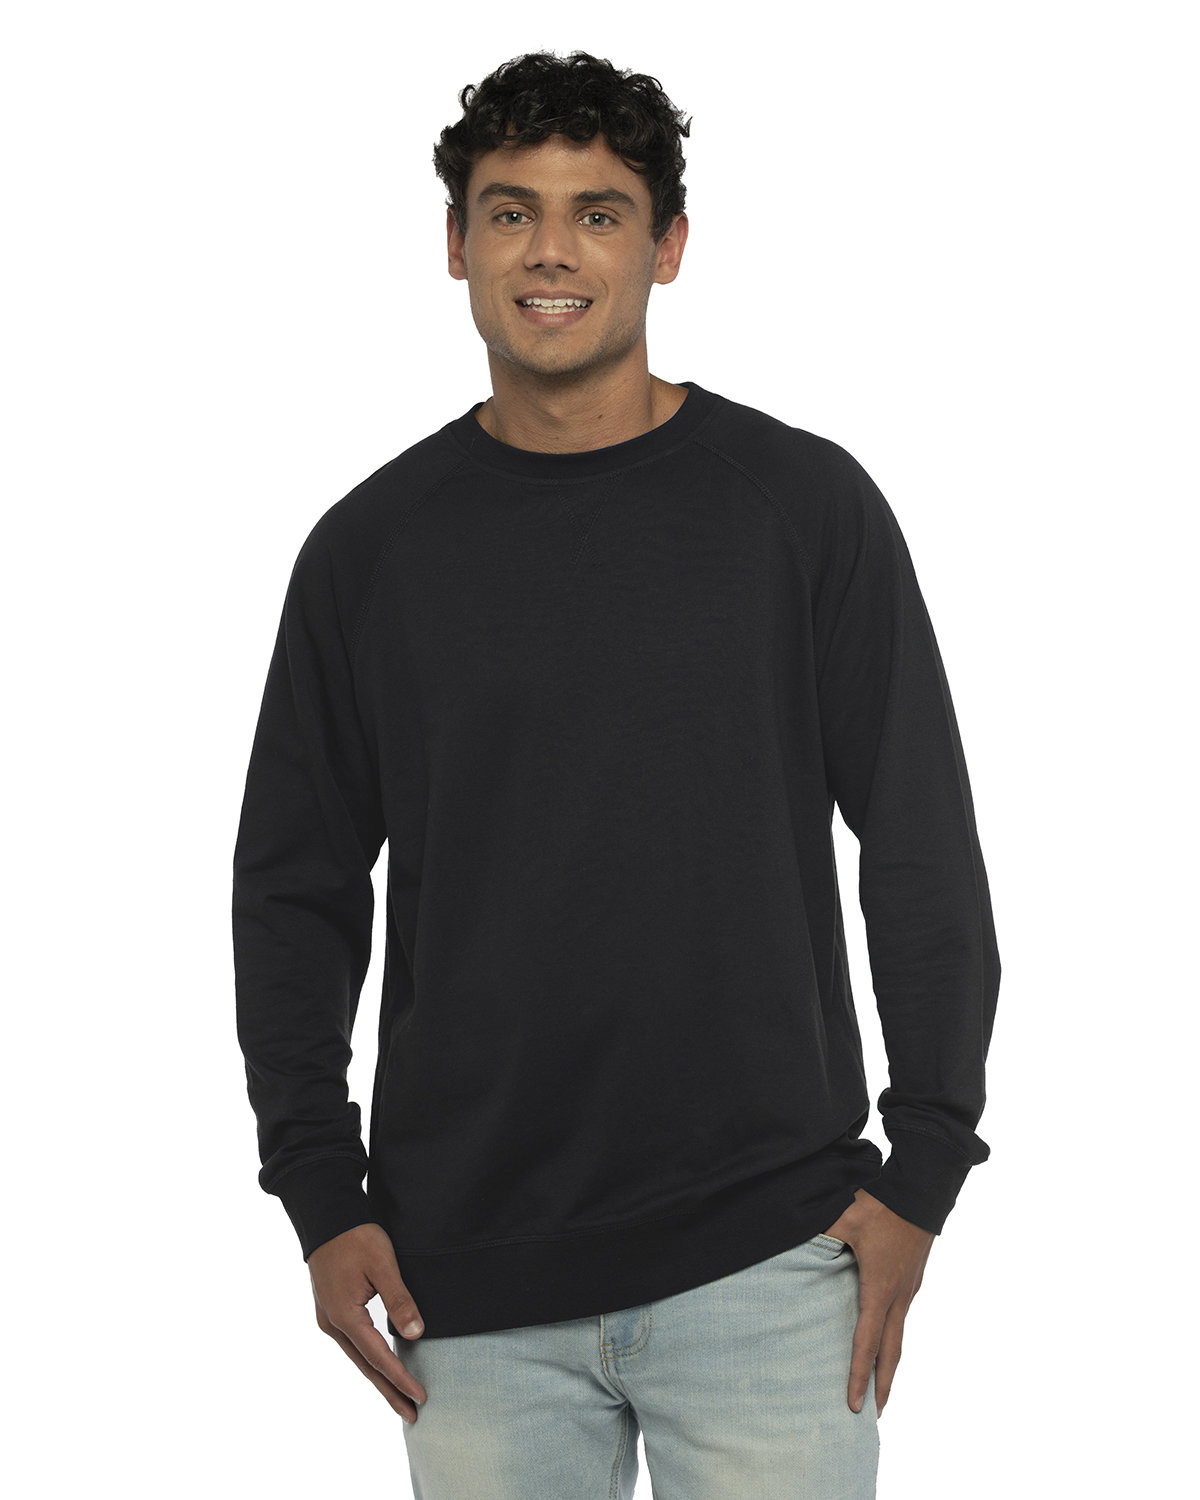 Next Level Unisex Laguna French Terry Raglan Sweatshirt BLACK 